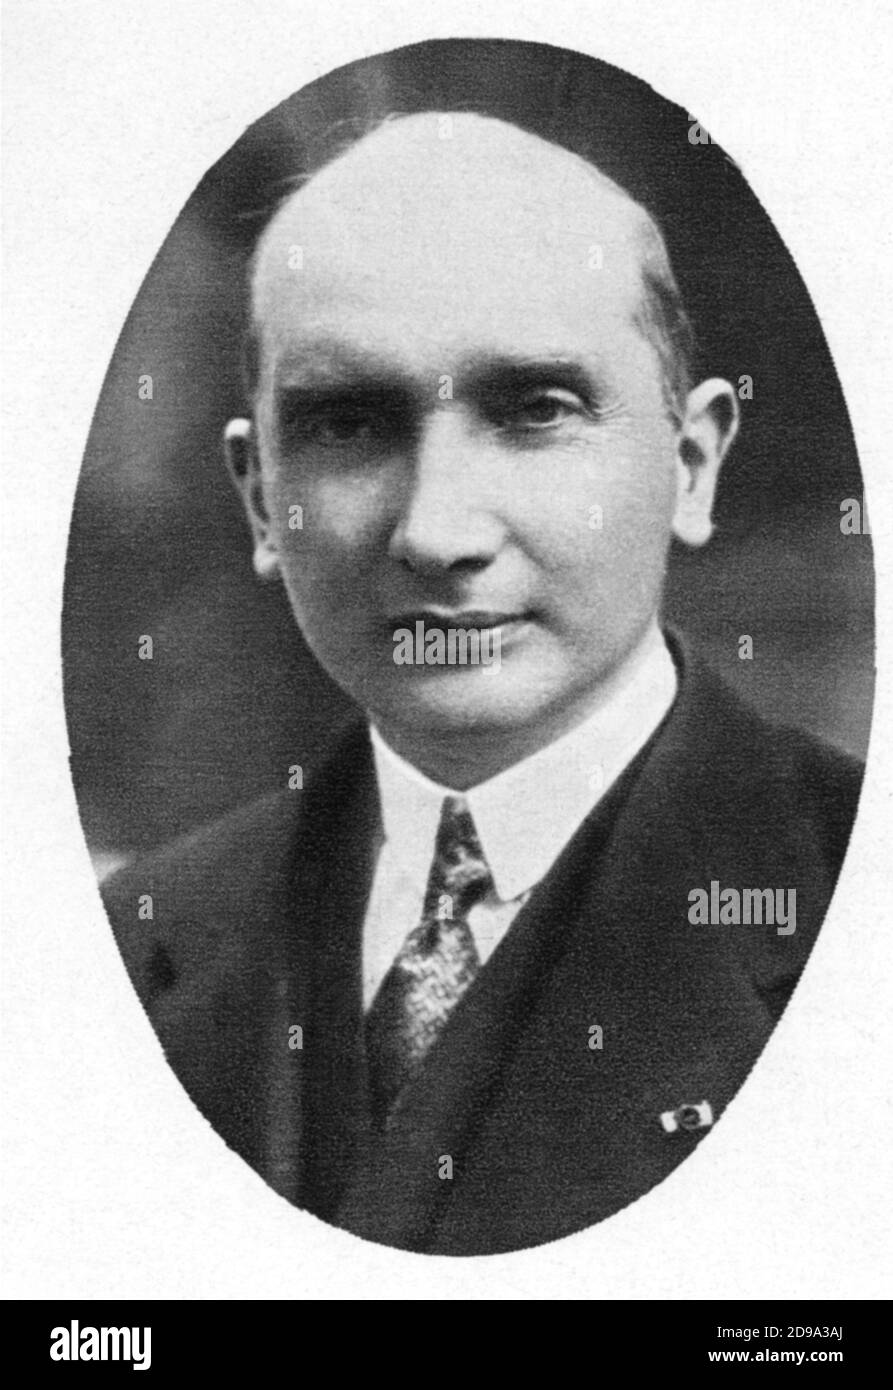 1928 : AUGUST ZALESKI ( ZALEWSKI , 1883 – 1972 ) was a Polish economist , politician and diplomat . Twice Minister of Foreign Affairs of the Republic of Poland, he served as the President of Poland within the Polish Government in Exile .   - POLITICO - POLITICA - POLITIC  - foto storiche - foto storica - portrait - ritratto - HISTORY - POLAND - POLONIA - collar - colletto - tie - cravatta   ----  Archivio GBB Stock Photo